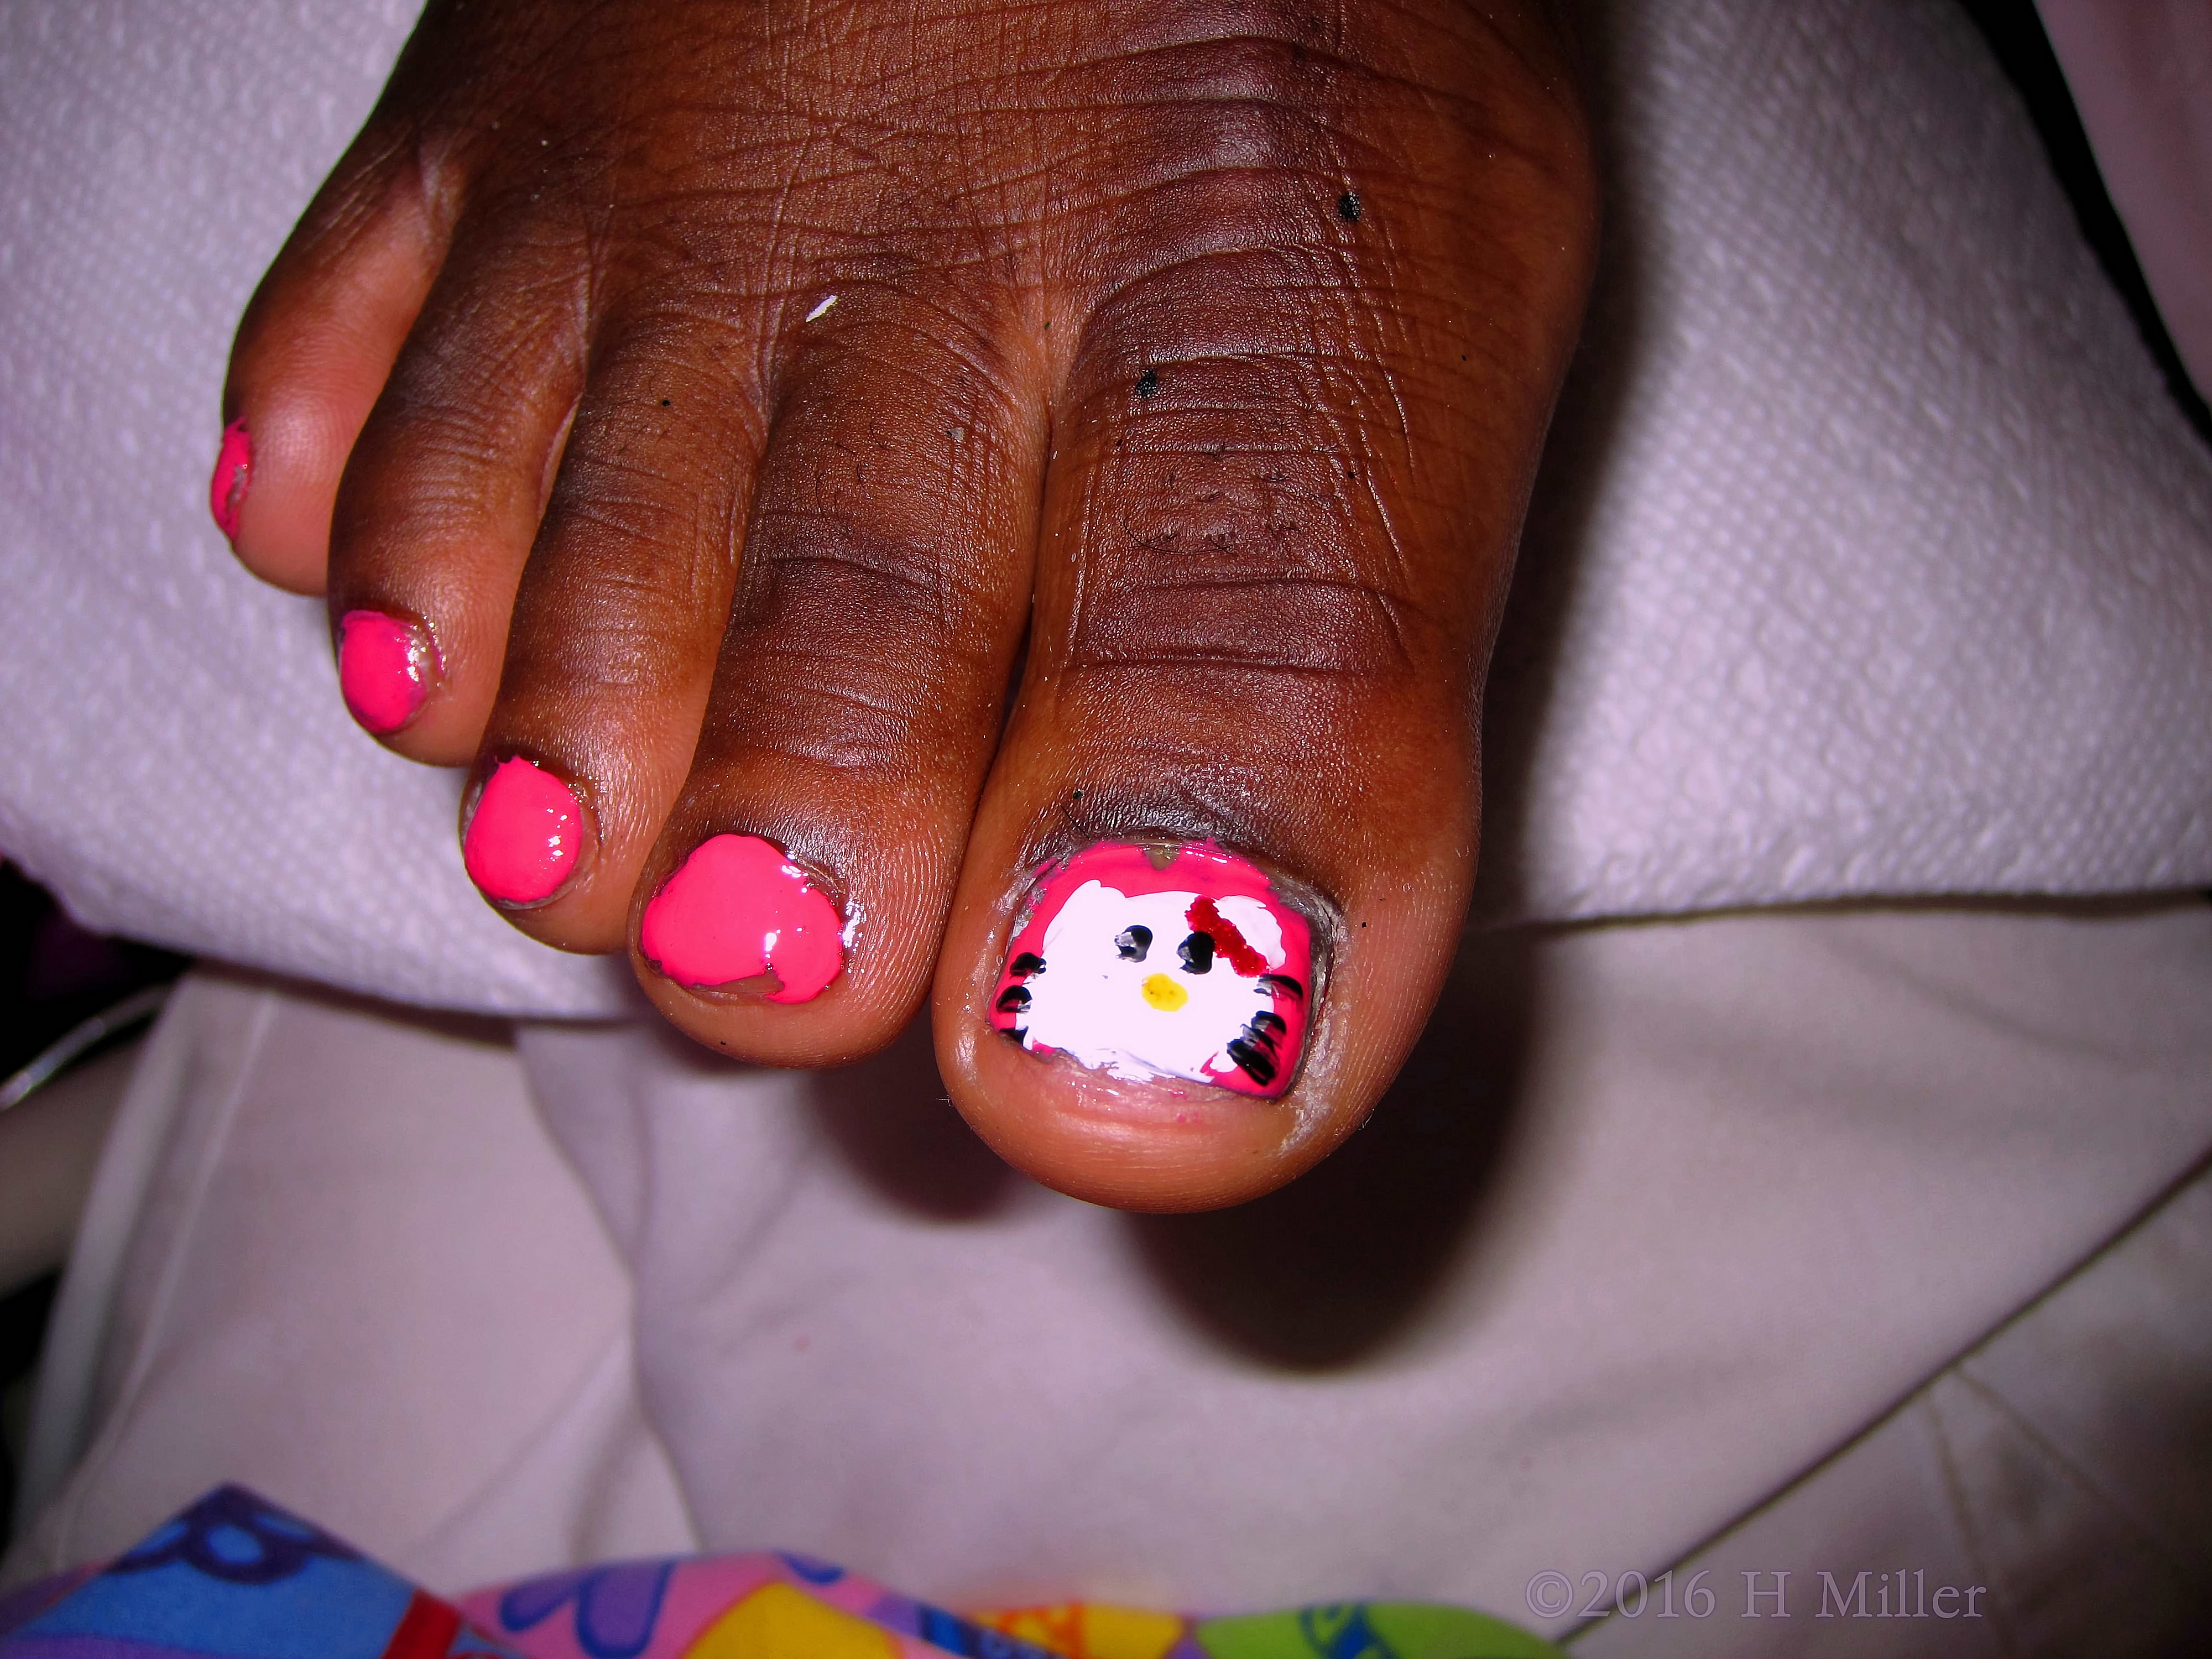 She Has Hello Kitty For Her Kids Pedi Nail Design! 